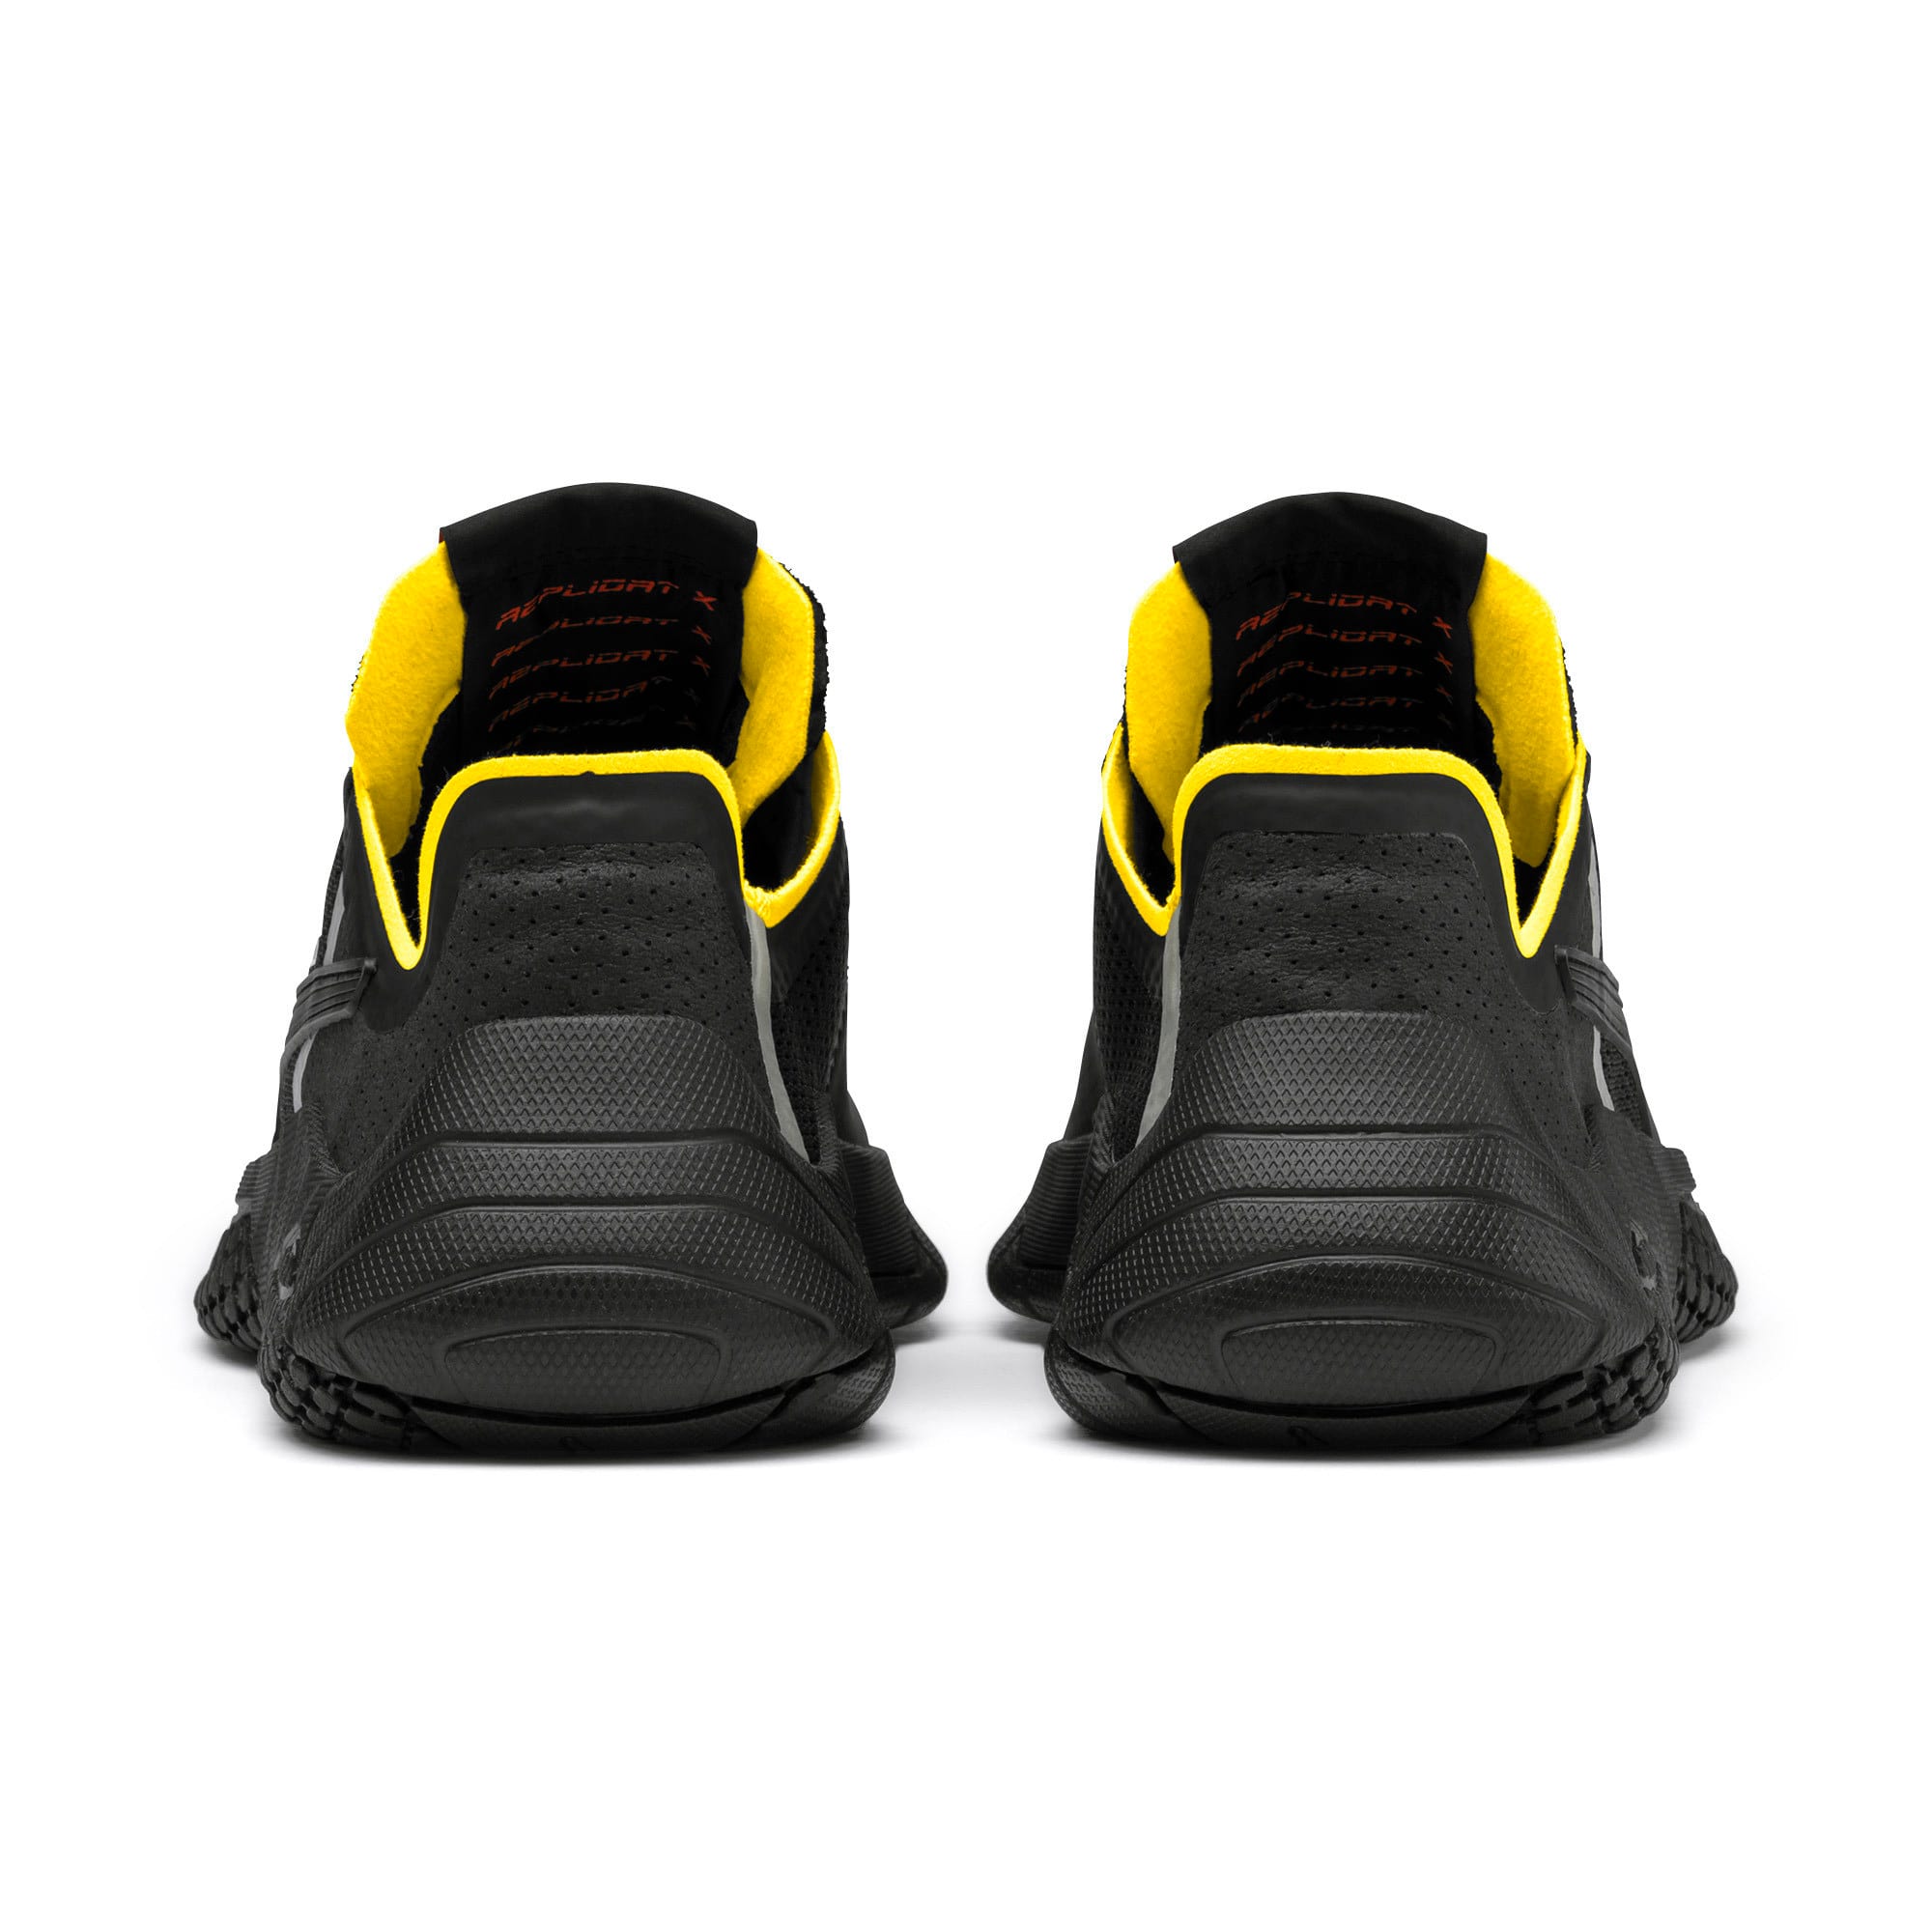 Replicat-X Pirelli Motorsport Shoes | PUMA US